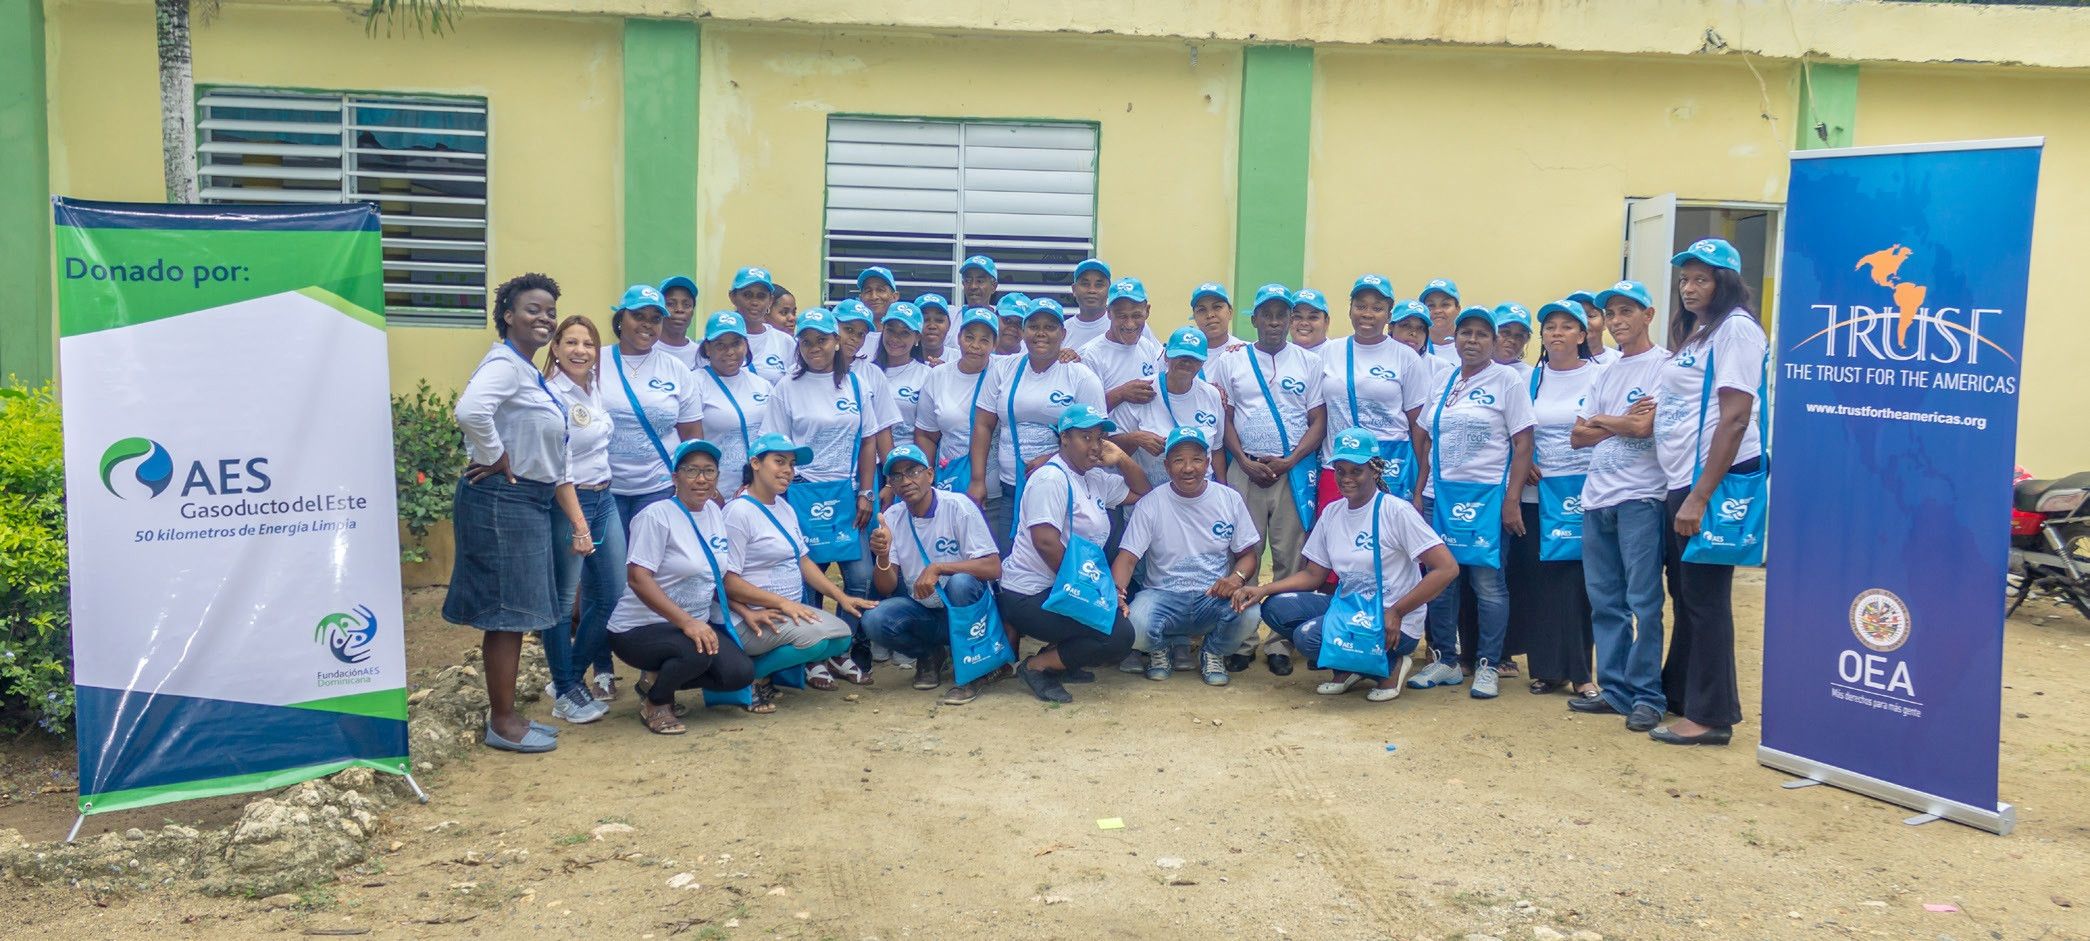 Fundación AES Dominicana y The Trust for the Americas impulsan a emprendedores